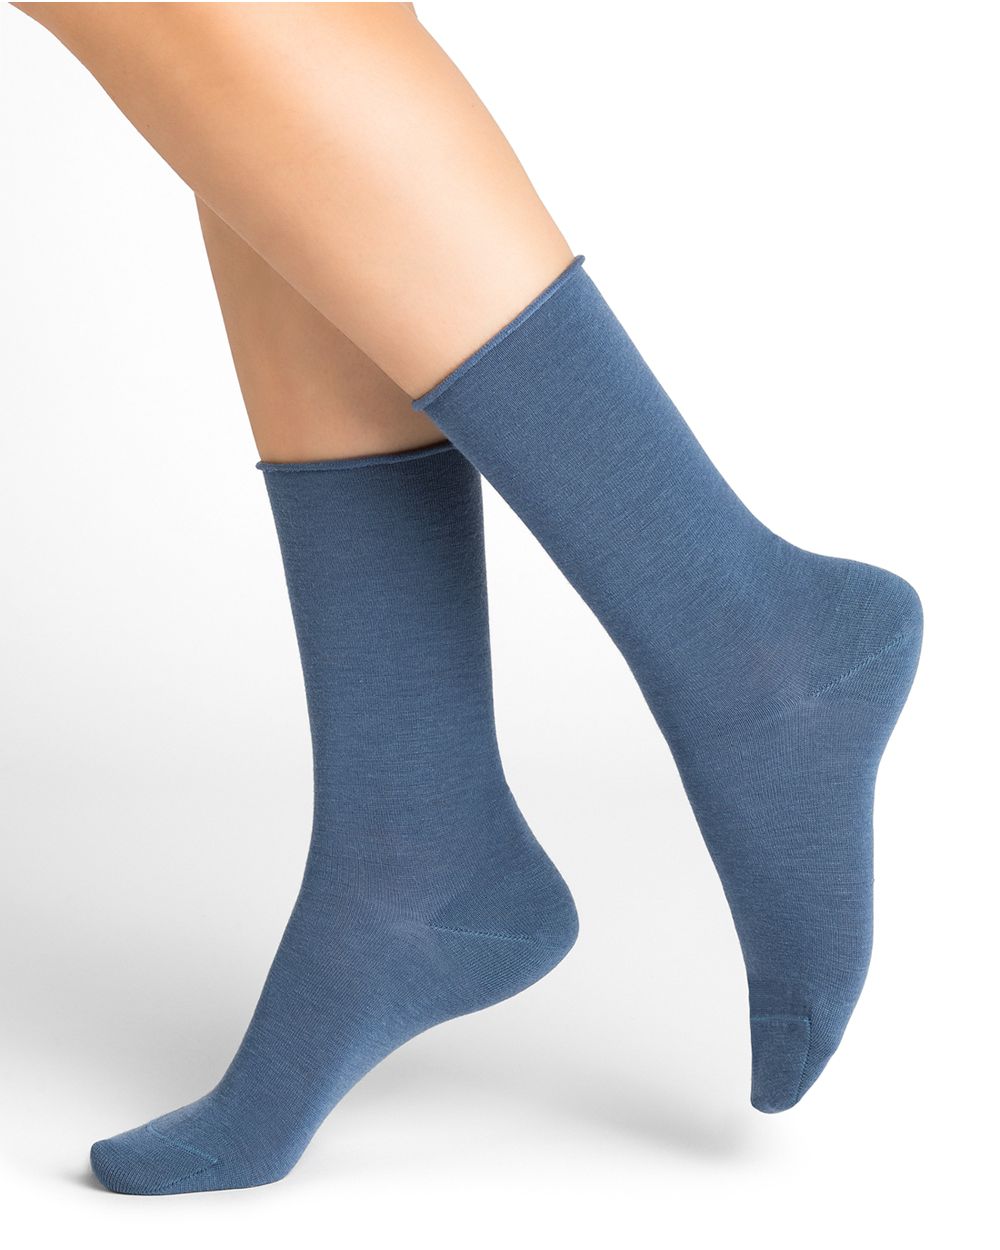 The legs of a woman wearing Bleuforet 6700 Roll Top Wool Socks.